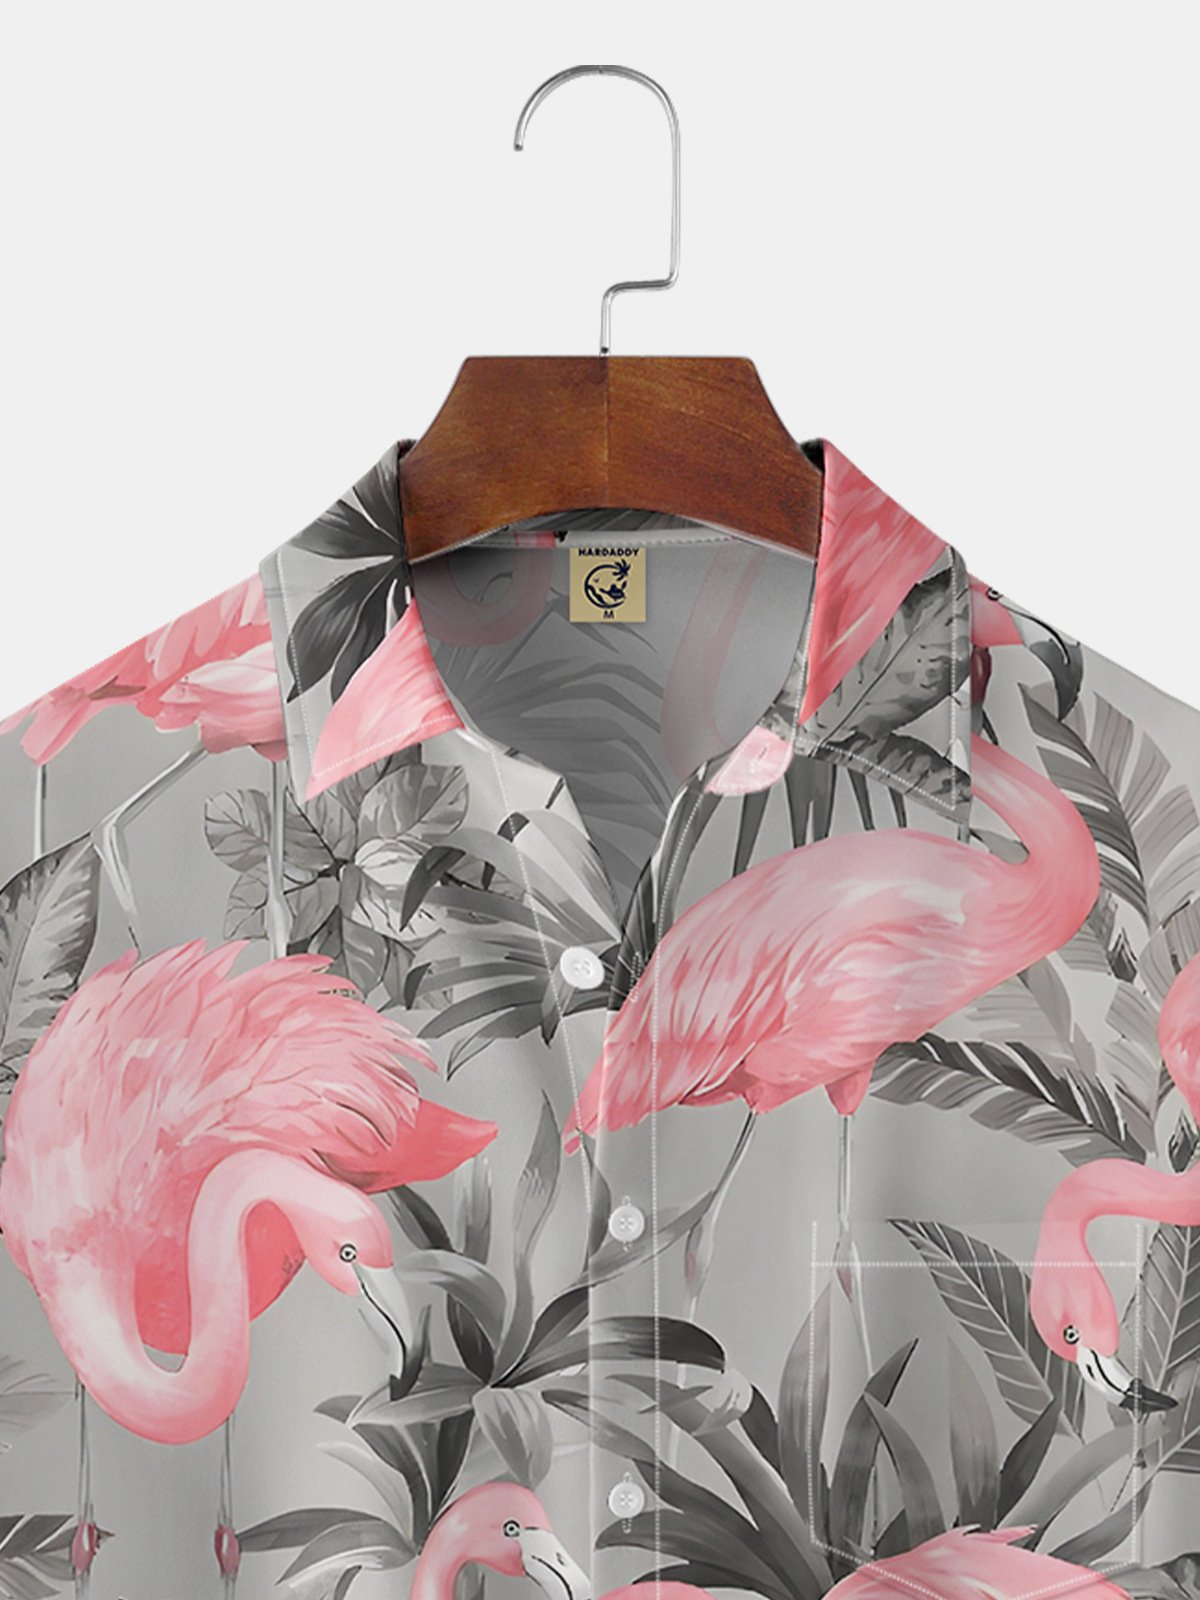 Hardaddy Men's Printed Casual Breathable Flamigo Short Sleeve Hawaiian Shirt